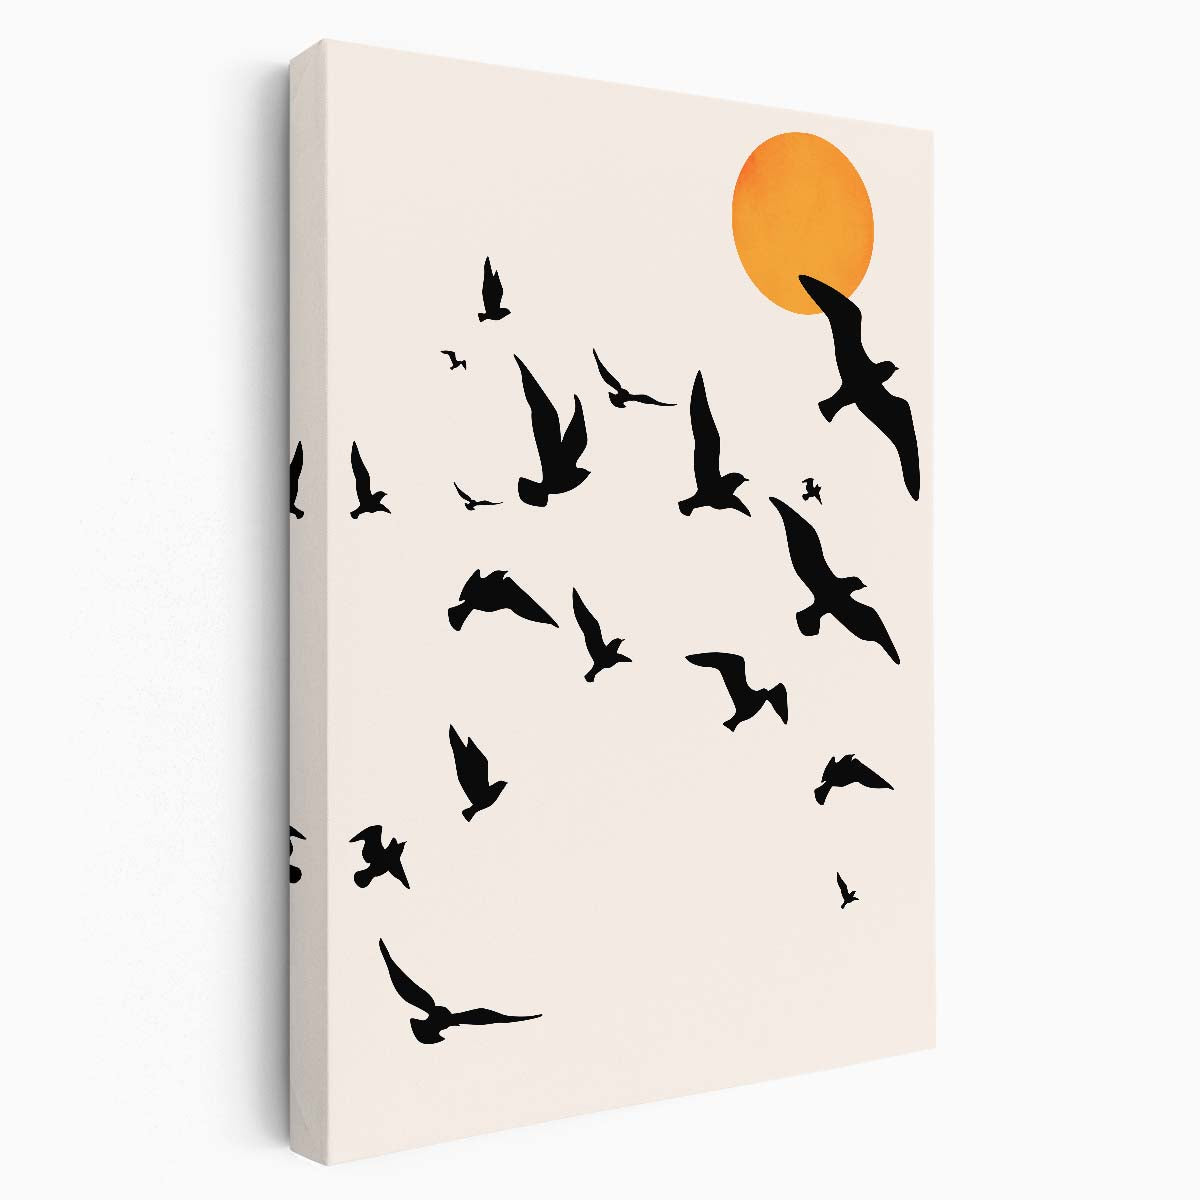 Bright Kubistika Bird Silhouette Illustration, Flying Wildlife Art by Luxuriance Designs, made in USA